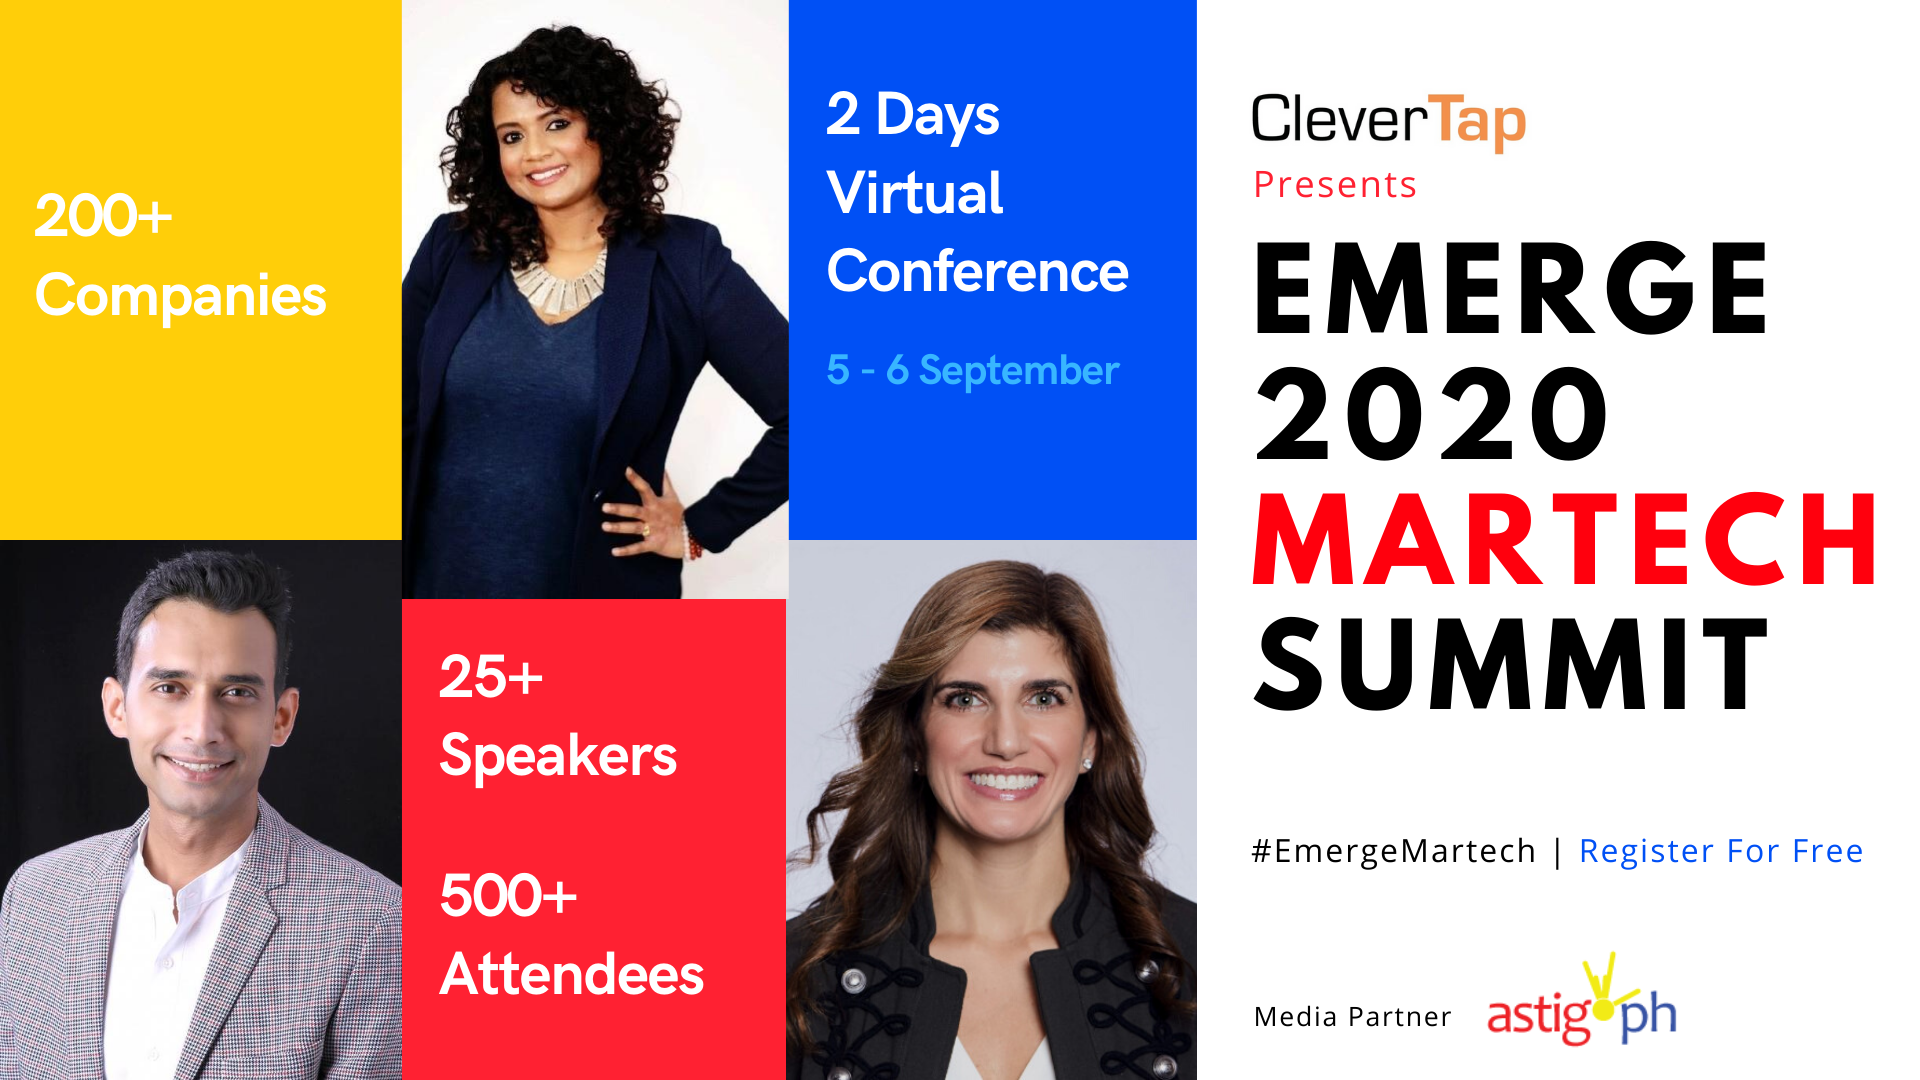 Clavent’s Emerge 2020 Martech Summit goes virtual ASTIG.PH